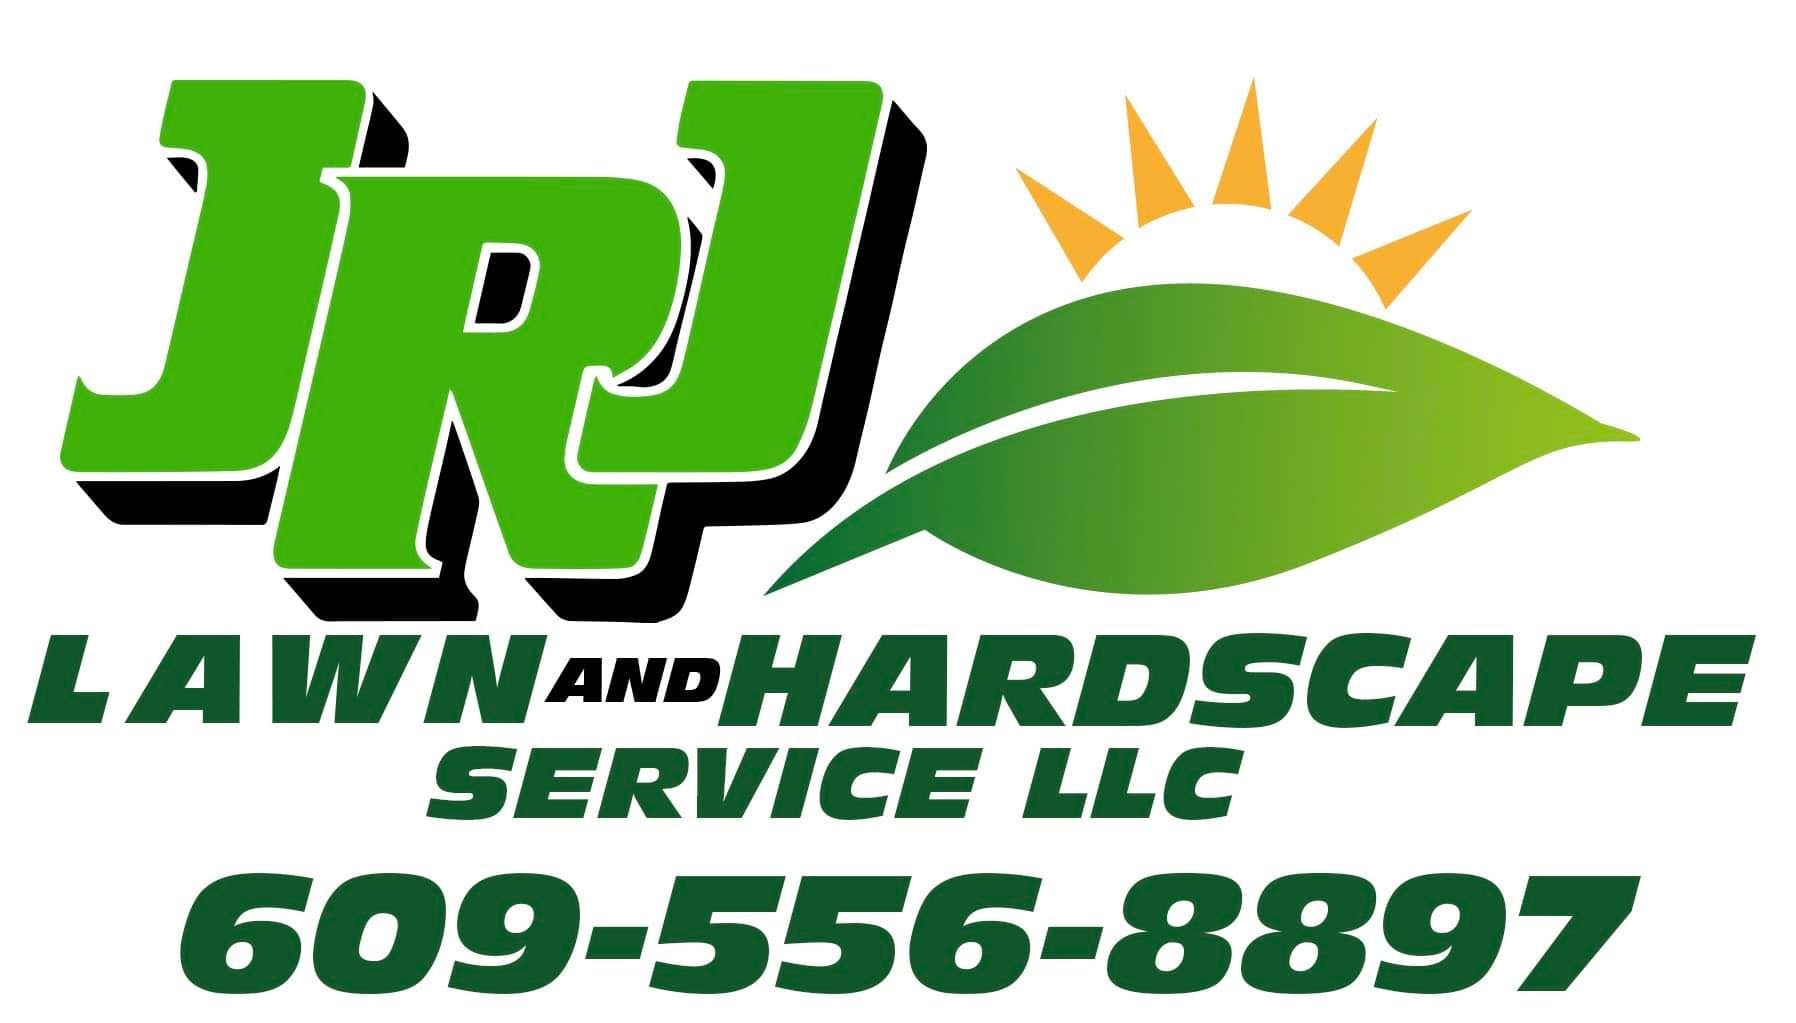 JRJ Lawn & Hardscape Services LLC